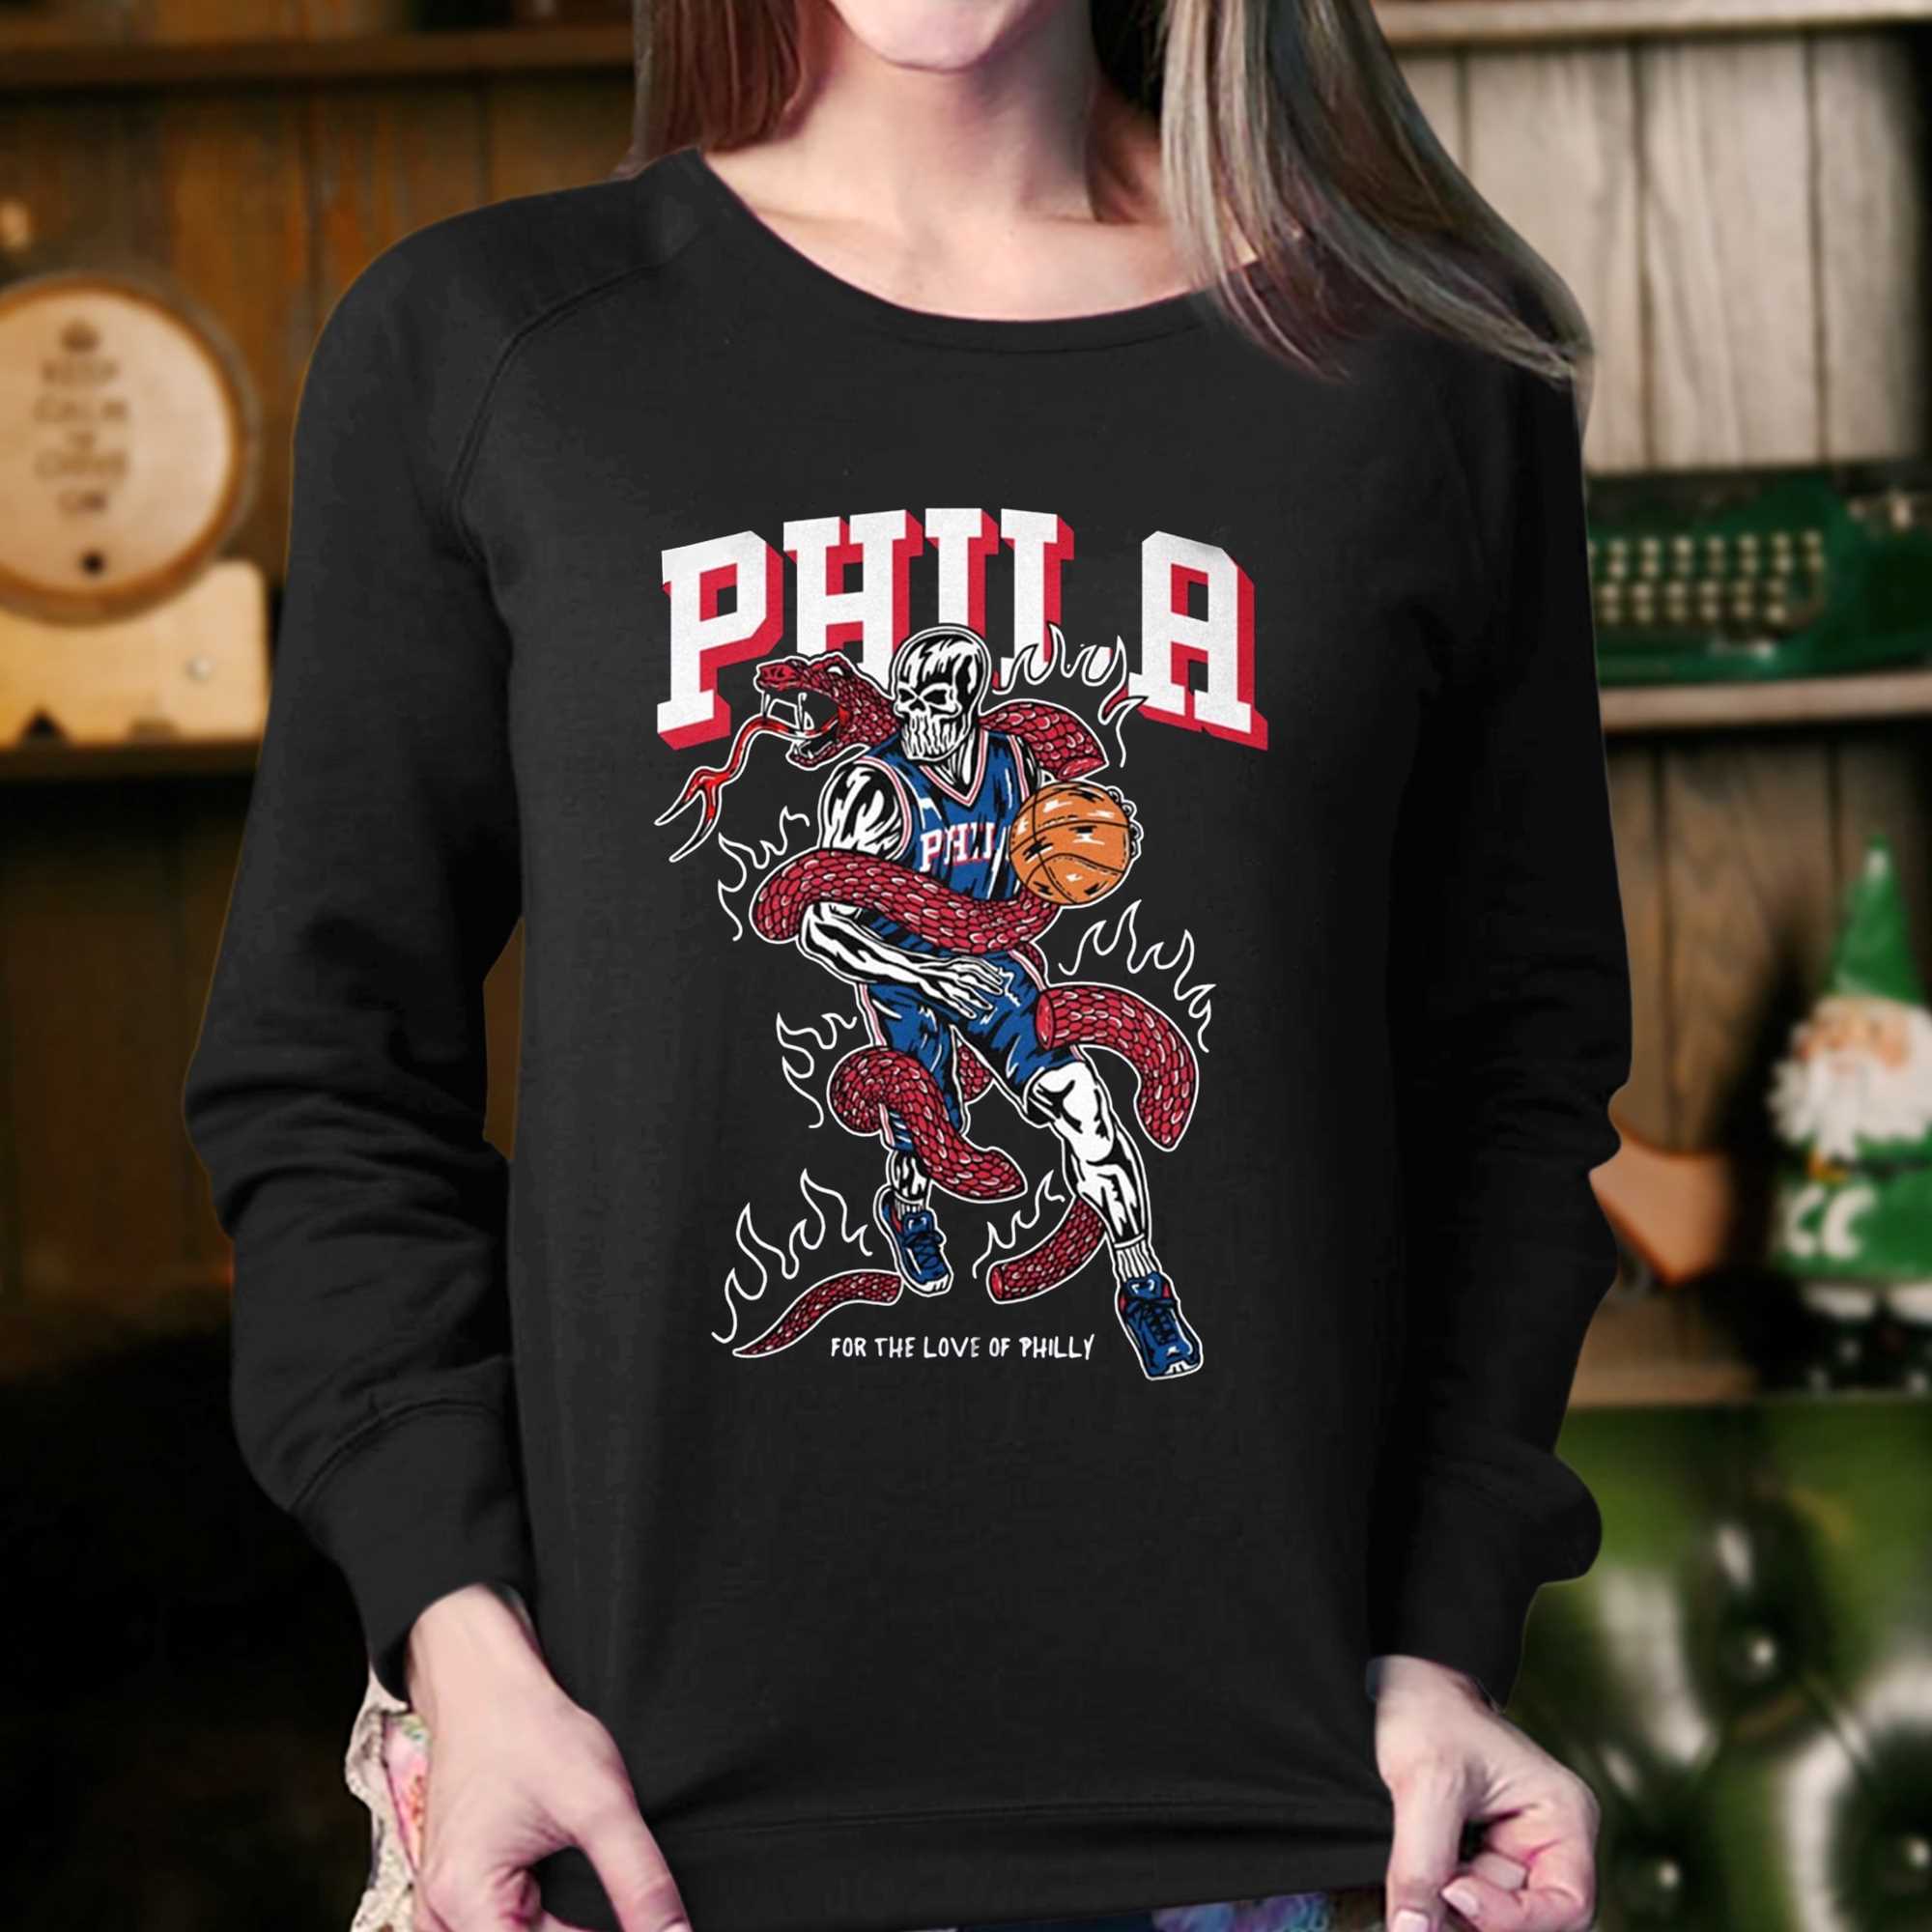 philadelphia 76 t shirt